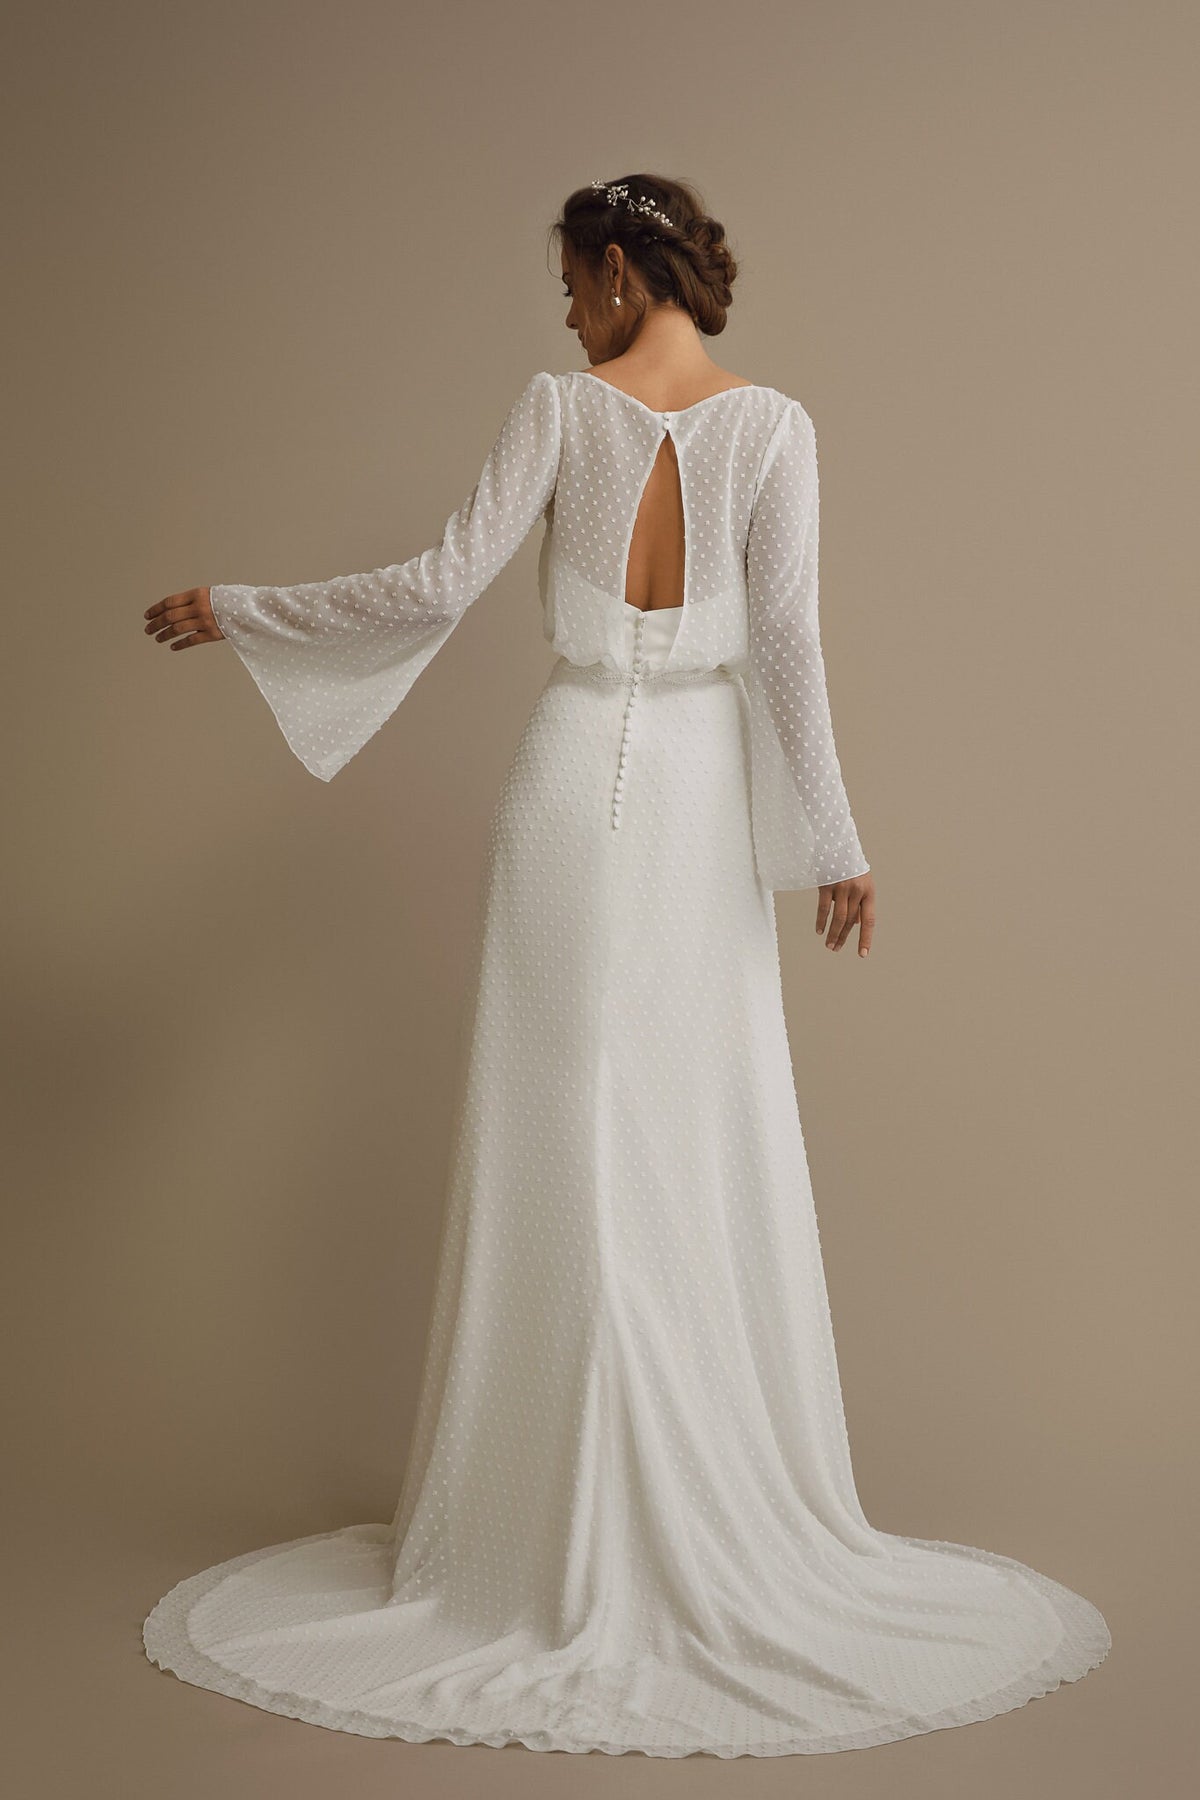 Boho Style Aline Wedding Dress Bridal Gown Modest Neckline Vintage Inspired Long Sleeve Bell Sleeve Train Classic Design Polka Dot